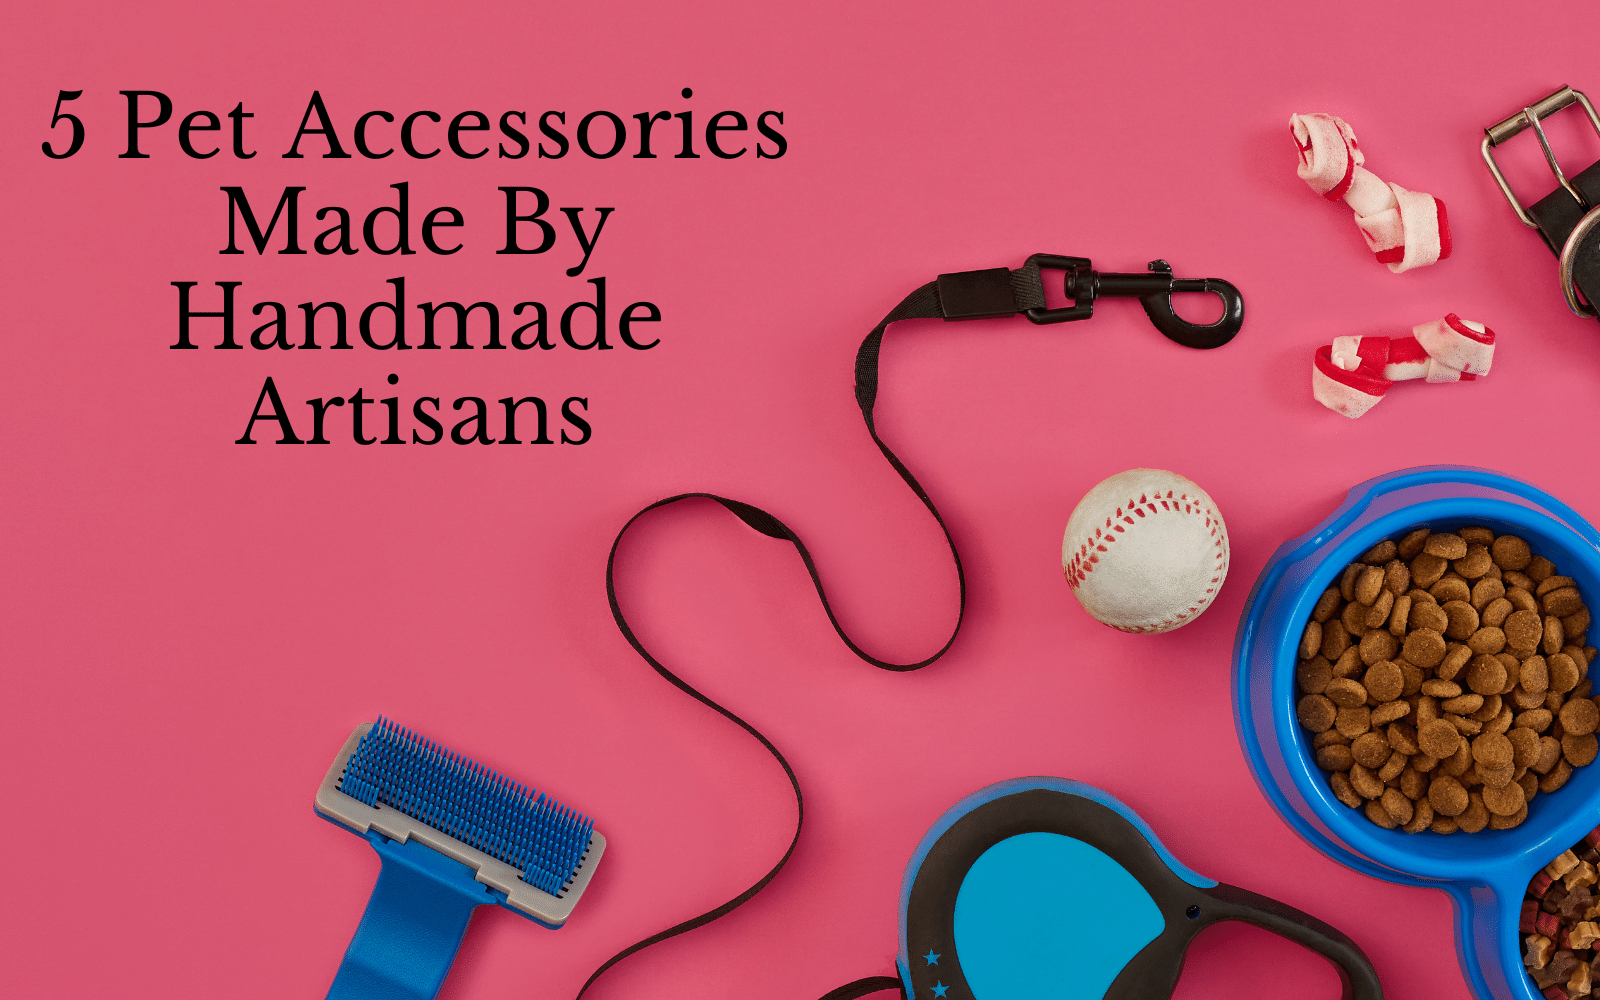 5 Pet Accessories Made By Handmade Artisans